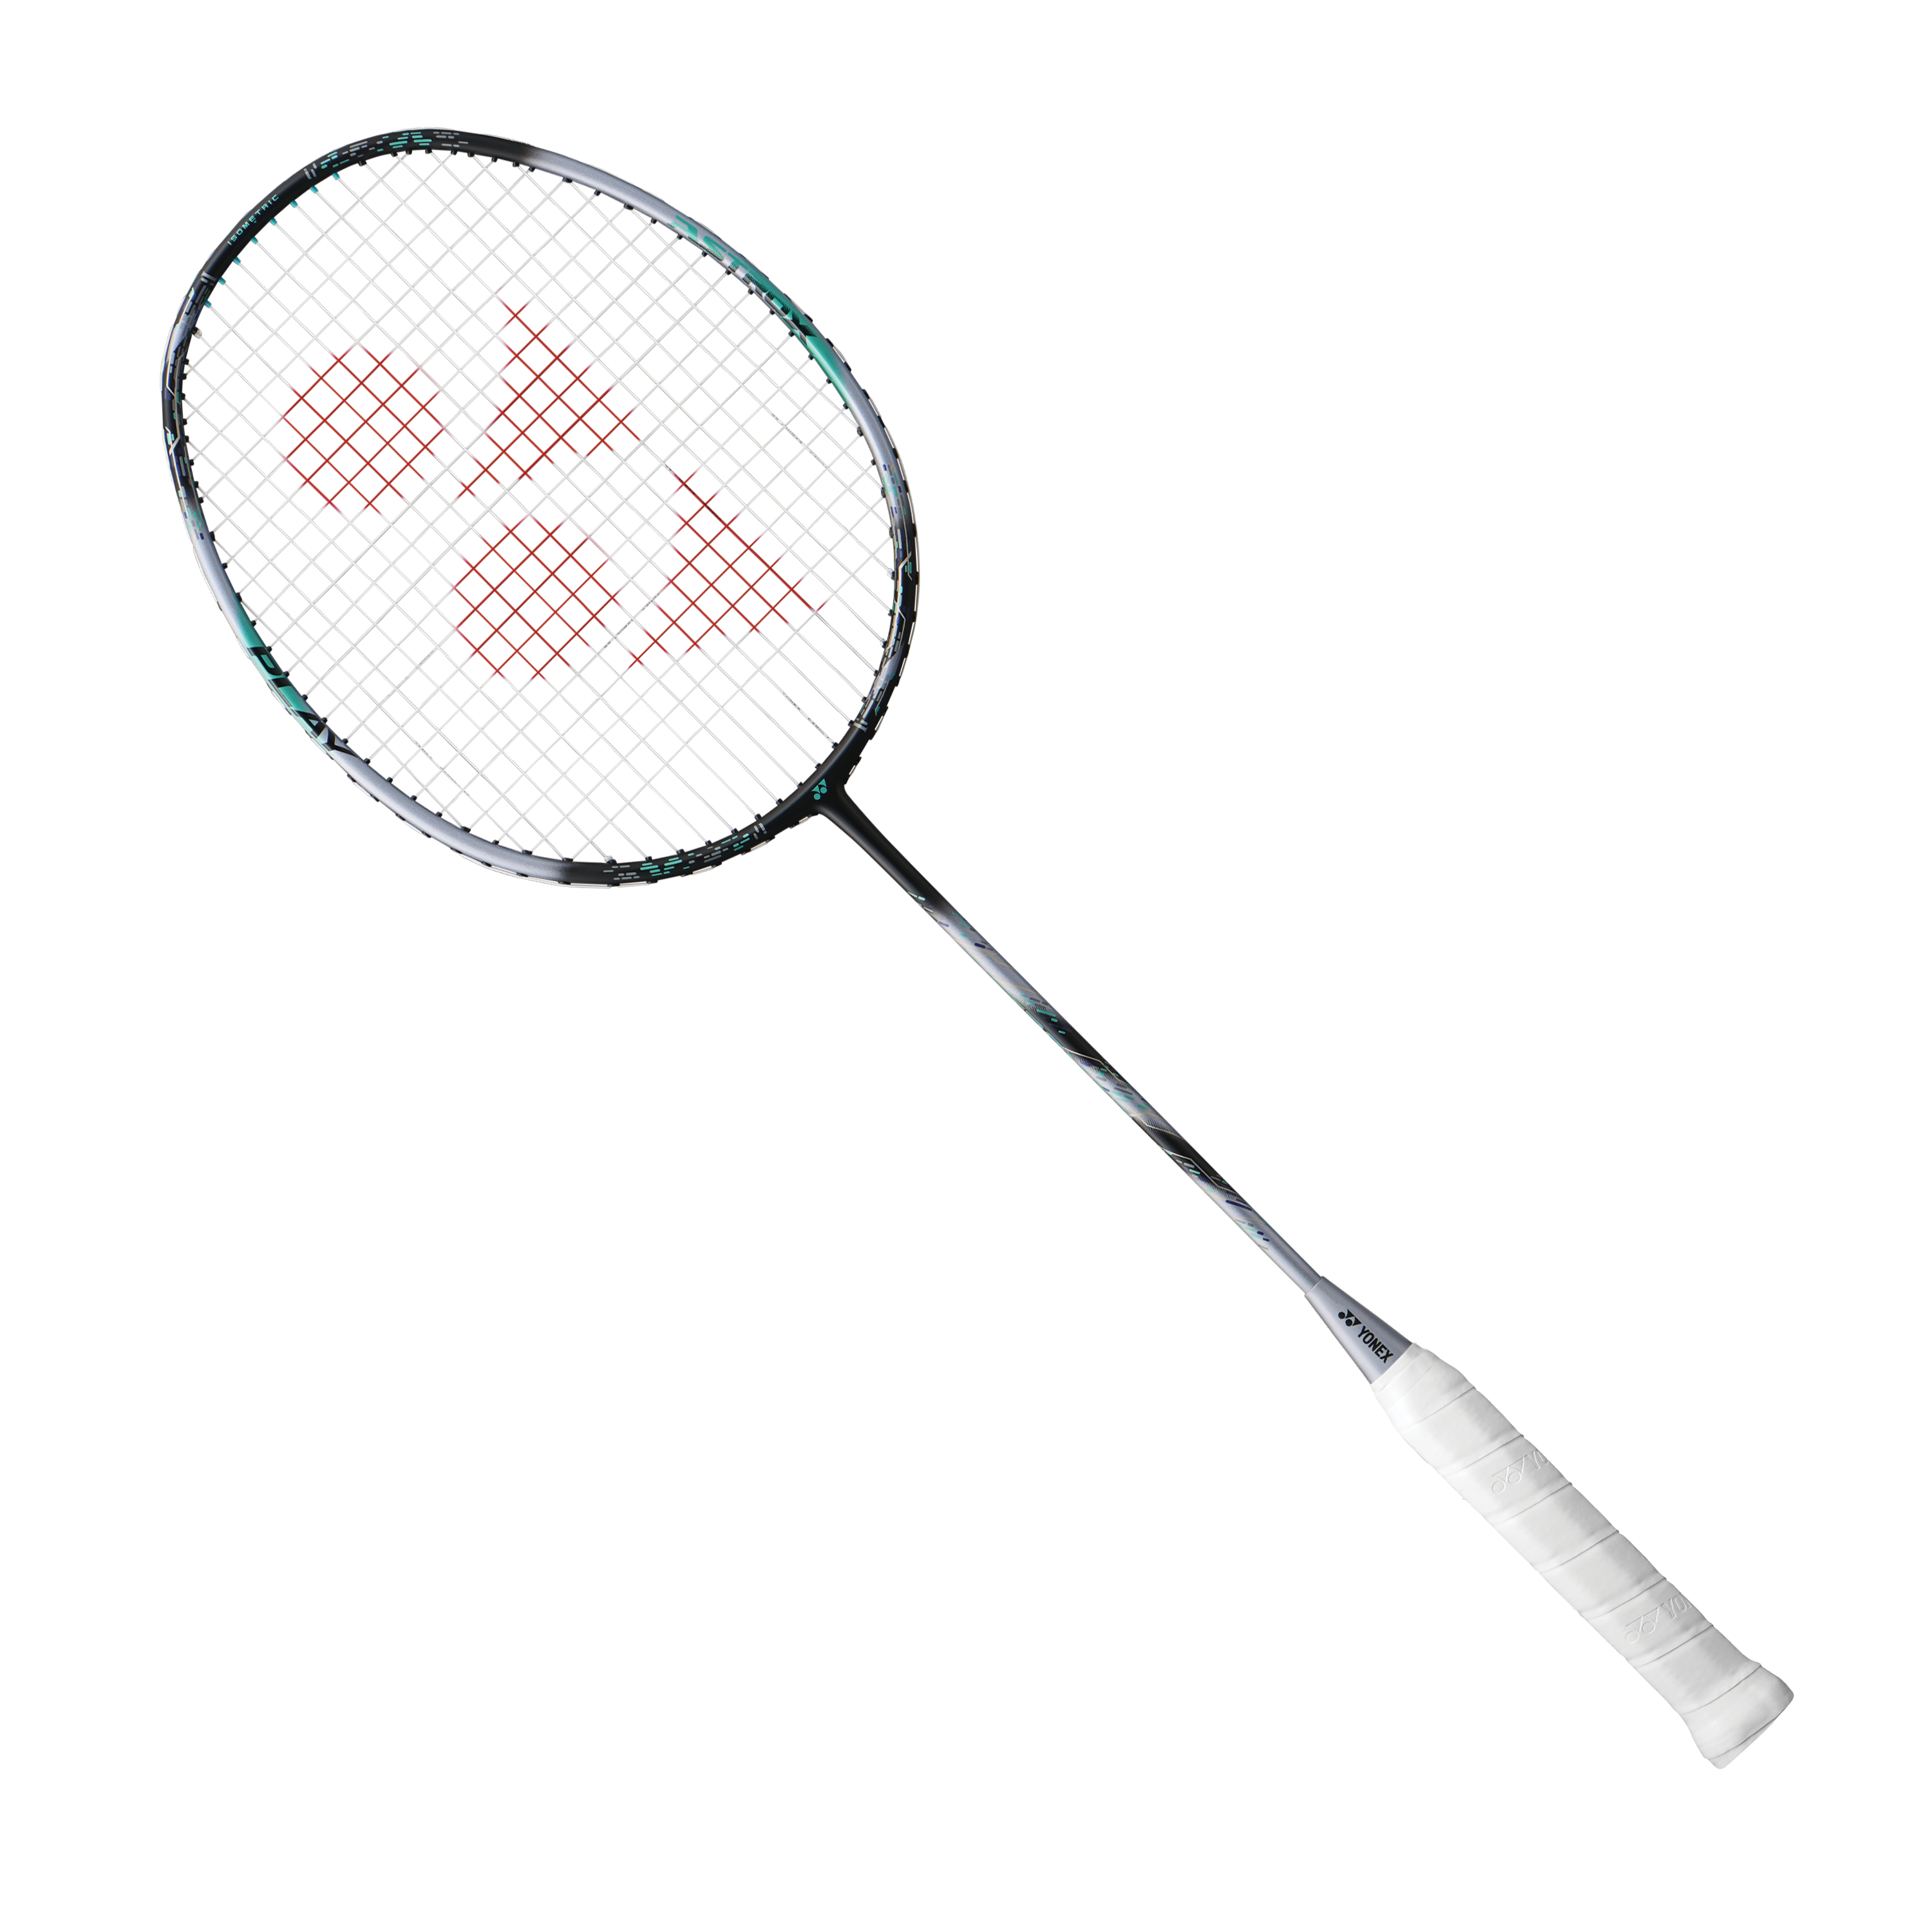 Yonex Astrox 88 Play Badminton Racquet Black/ Silver 4U(83g)G5 (Ready to Go)